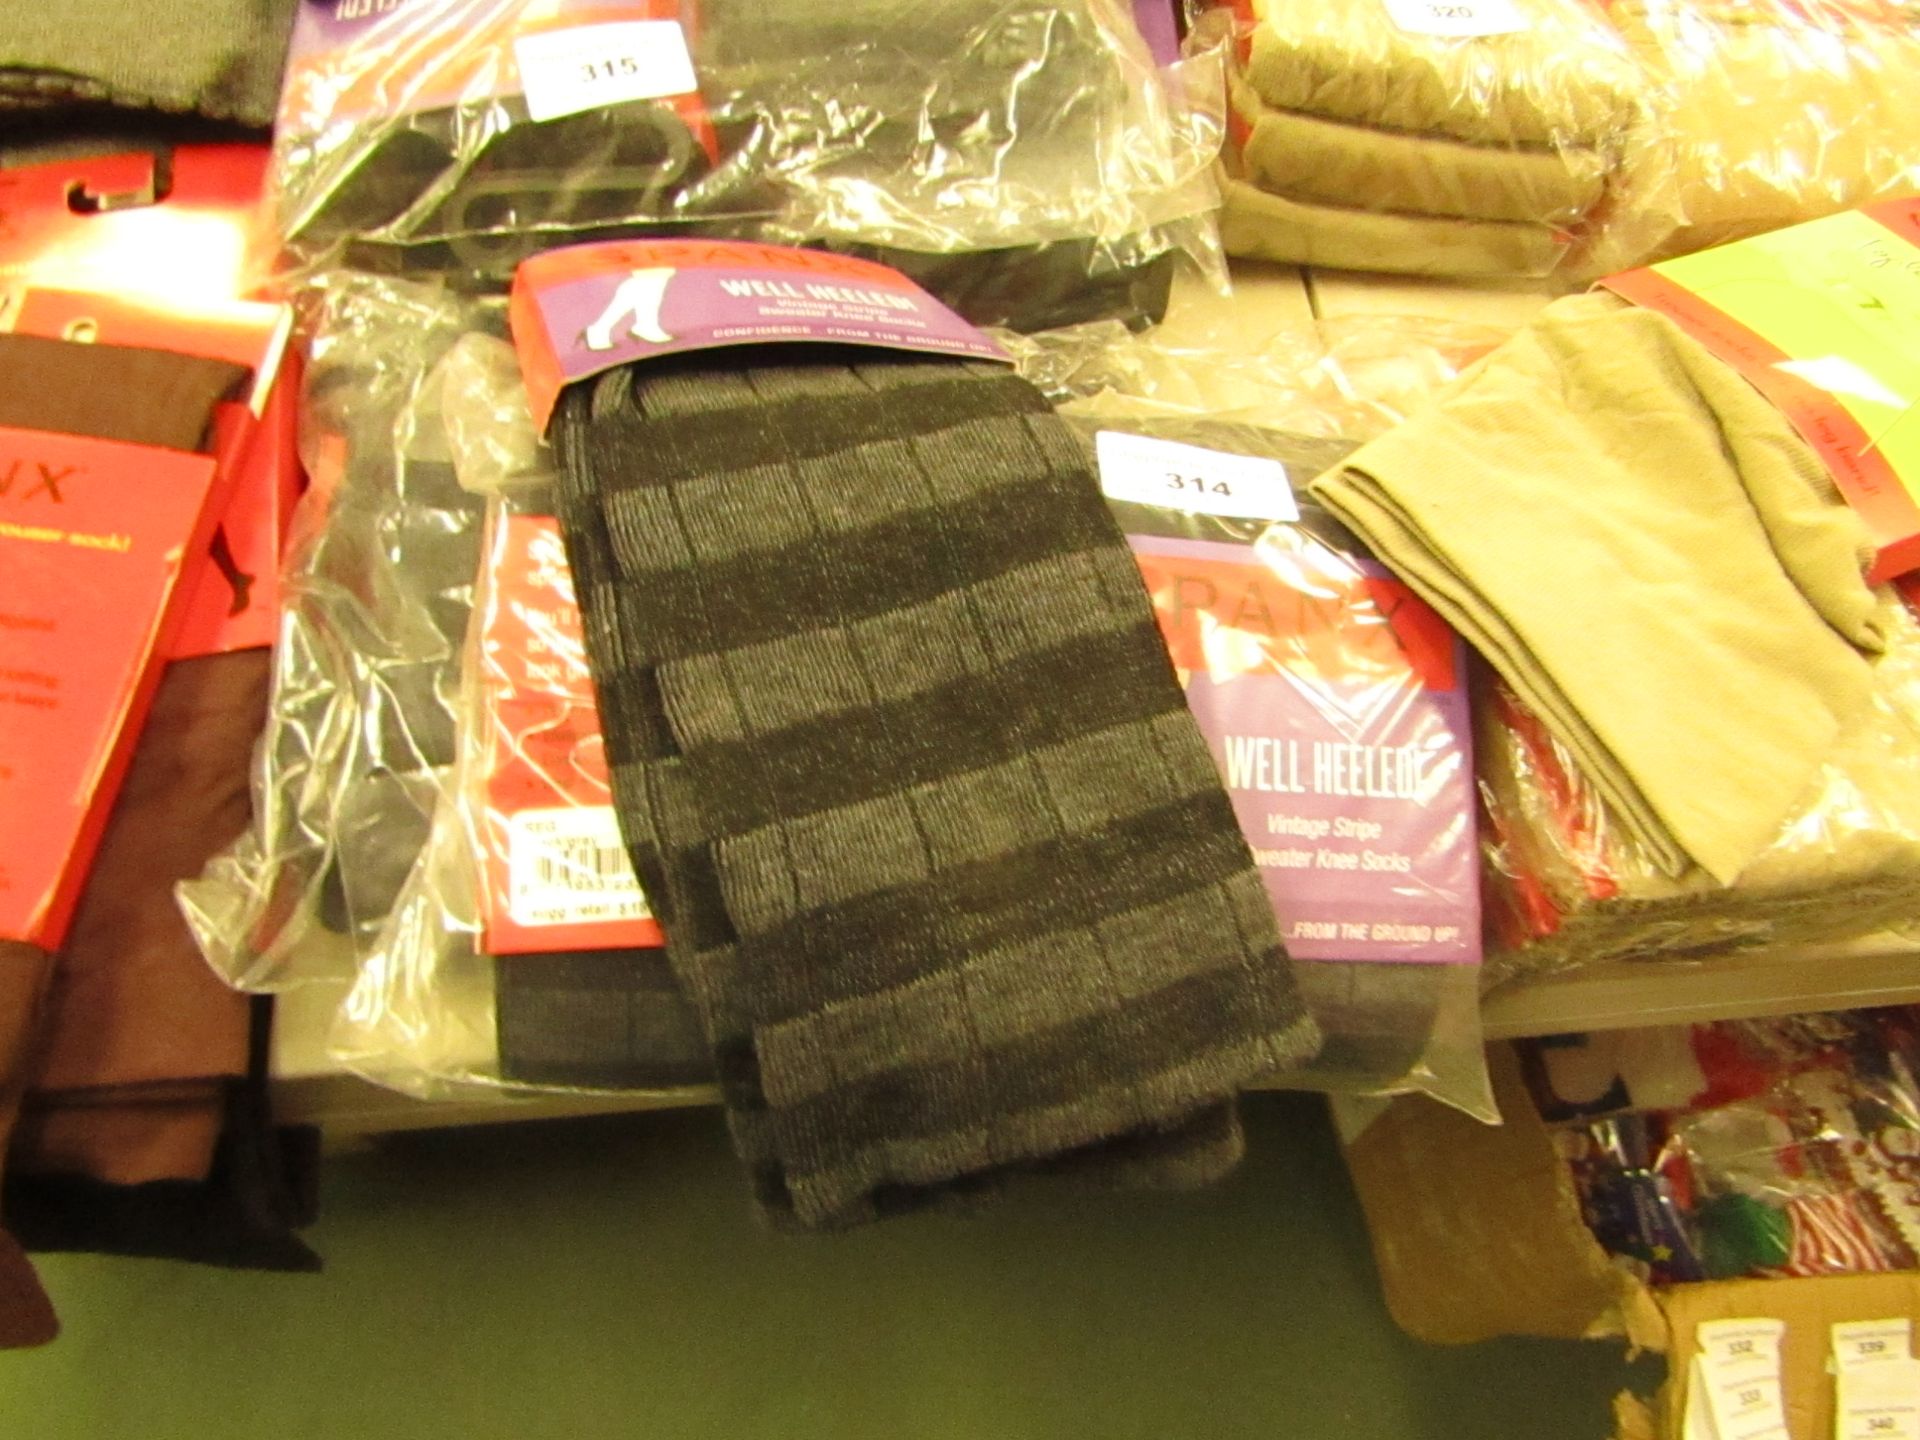 6x pairs of Spanx well healed vintage stripe sweater knee socks, new, RRP £4 each pair